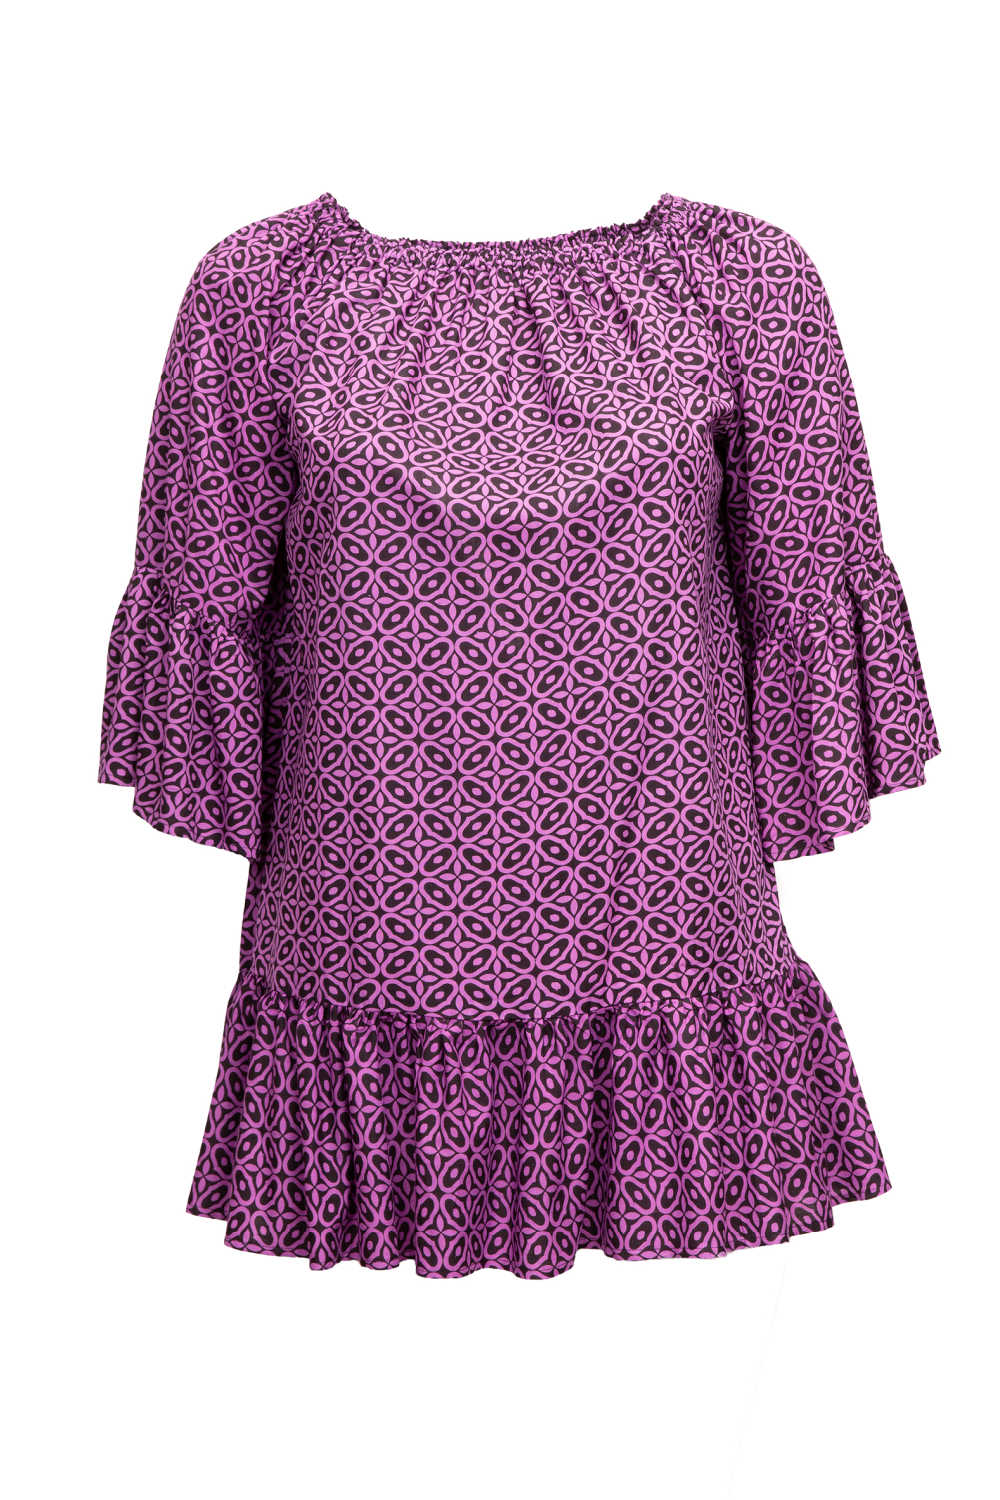 womens-short-sun-dress-geometric-print-black-purple